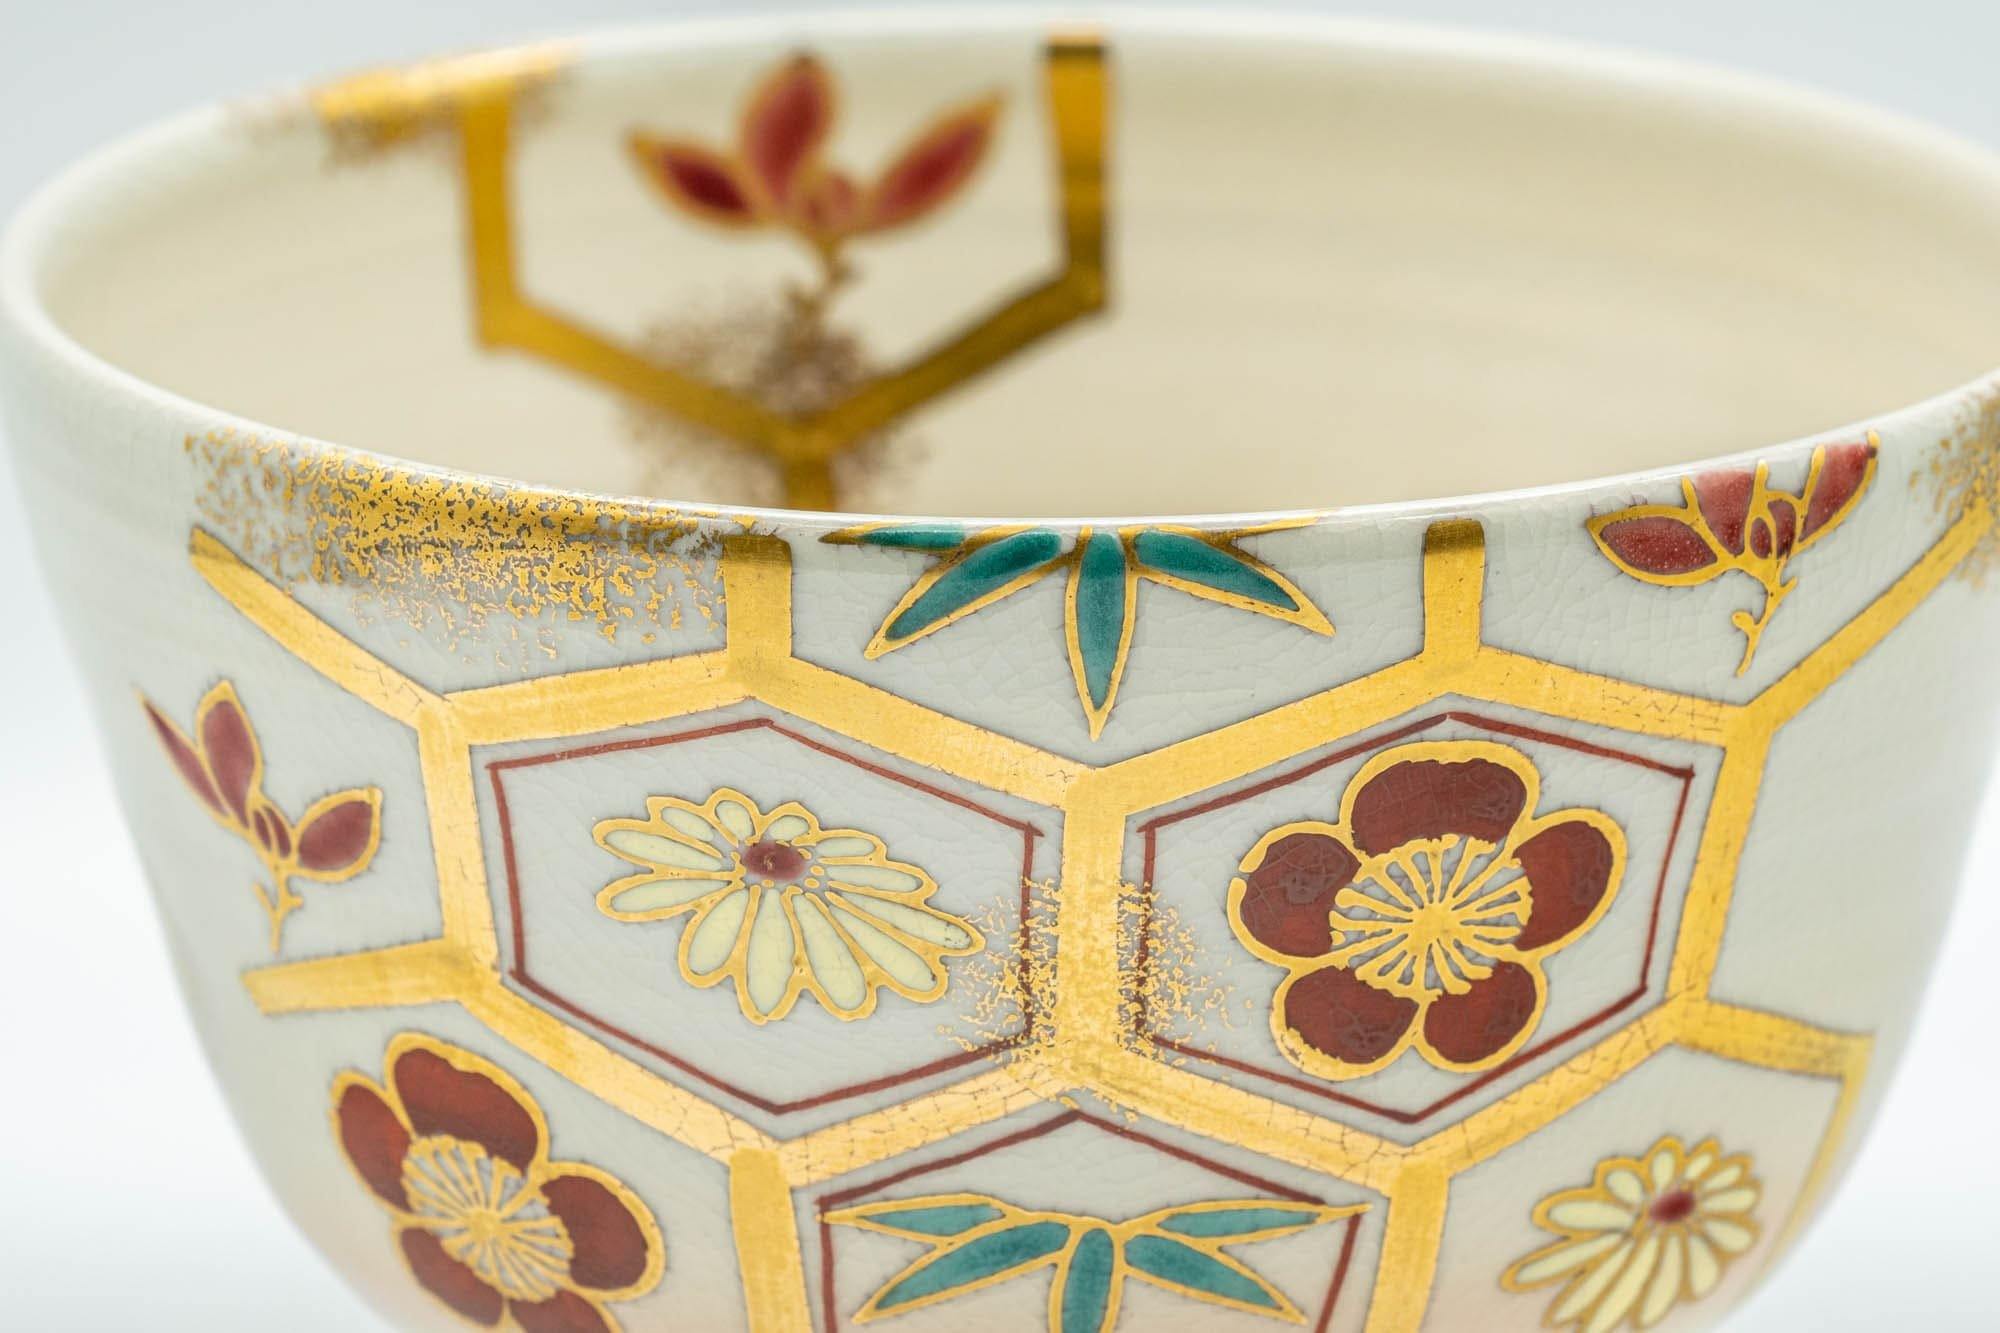 Japanese Matcha Bowl - Floral Gold Painted Kyo-yaki Chawan - 350ml - Tezumi